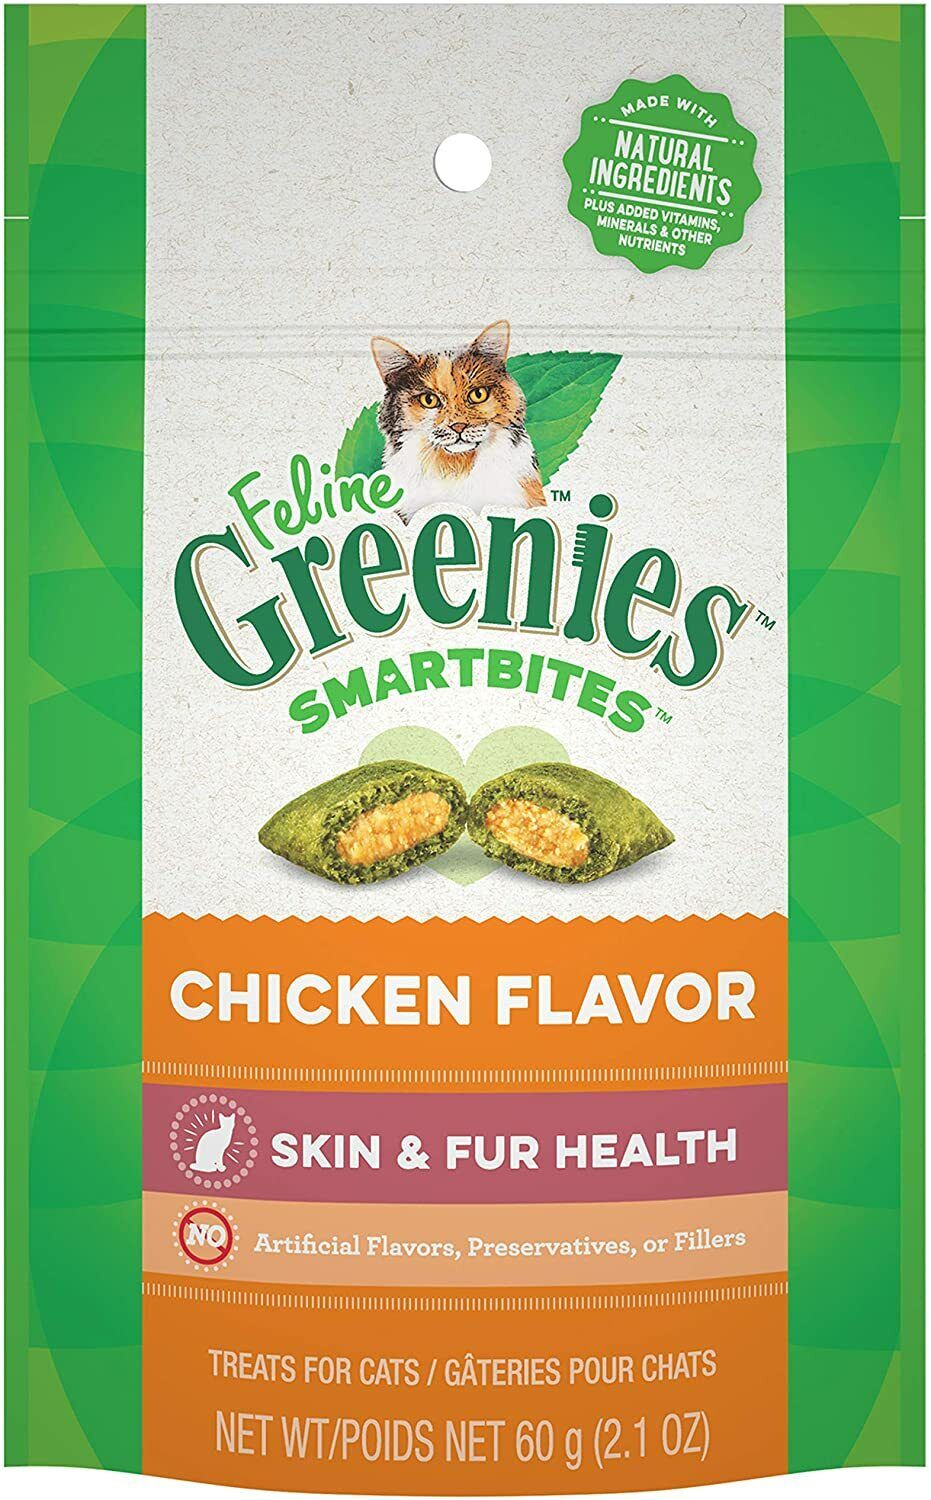 Greenies Feline SMARTBITES Healthy Skin and Fur, Chicken